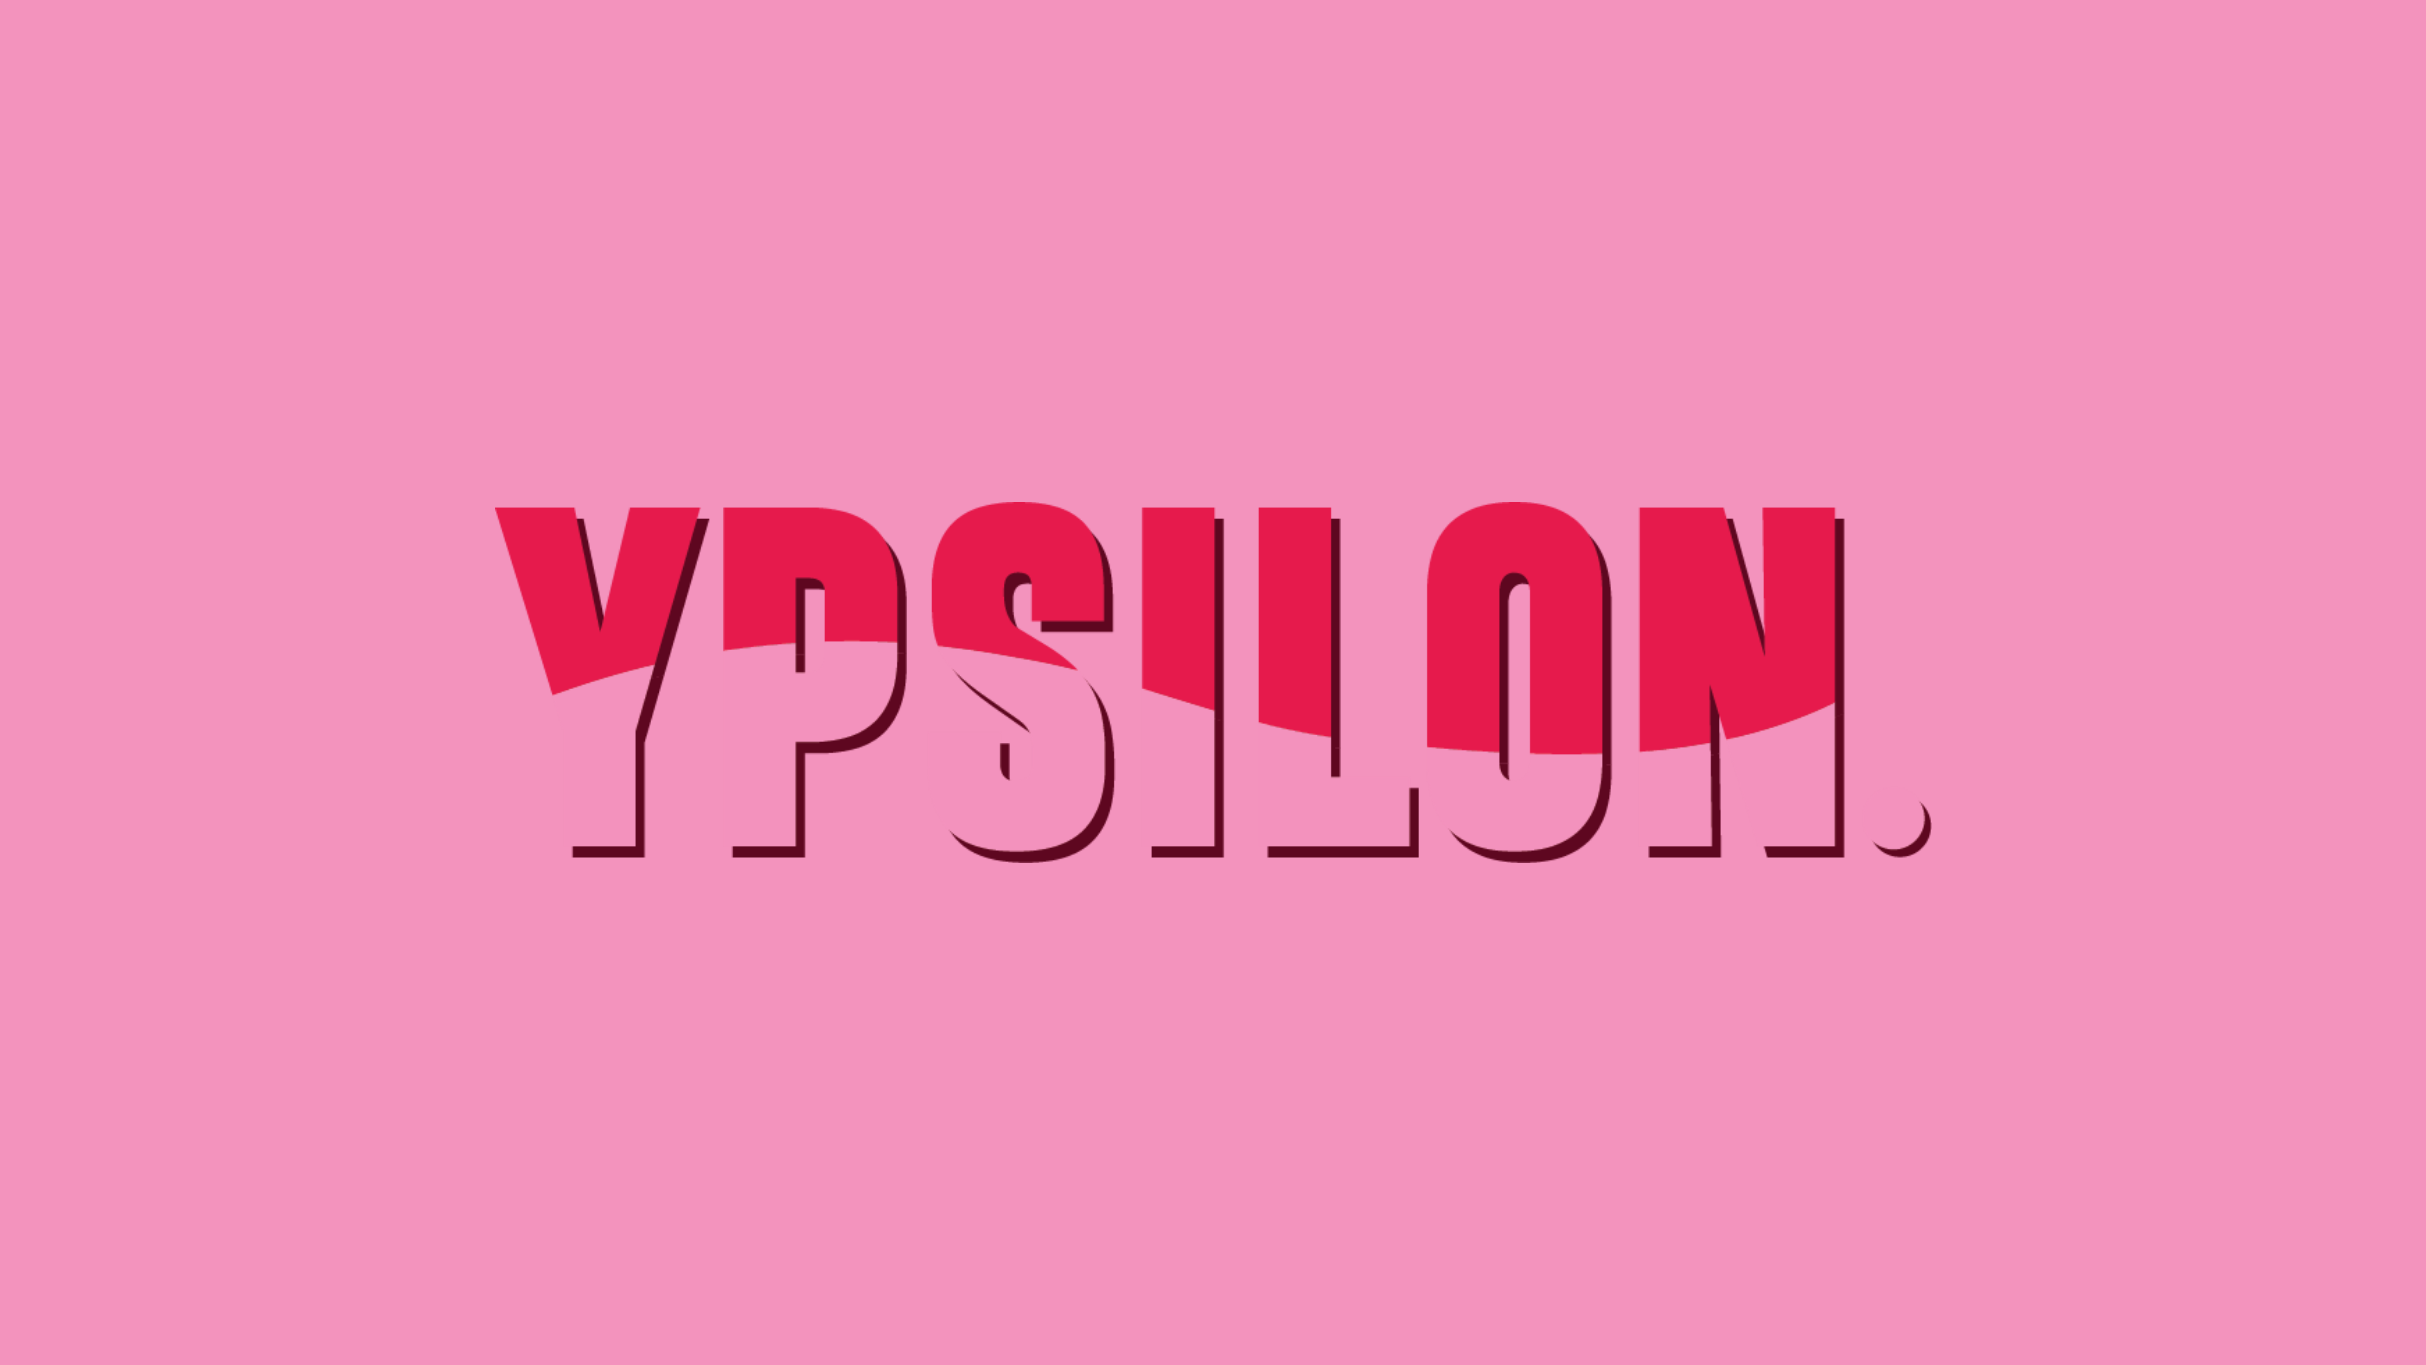 Ypsilon presale information on freepresalepasswords.com